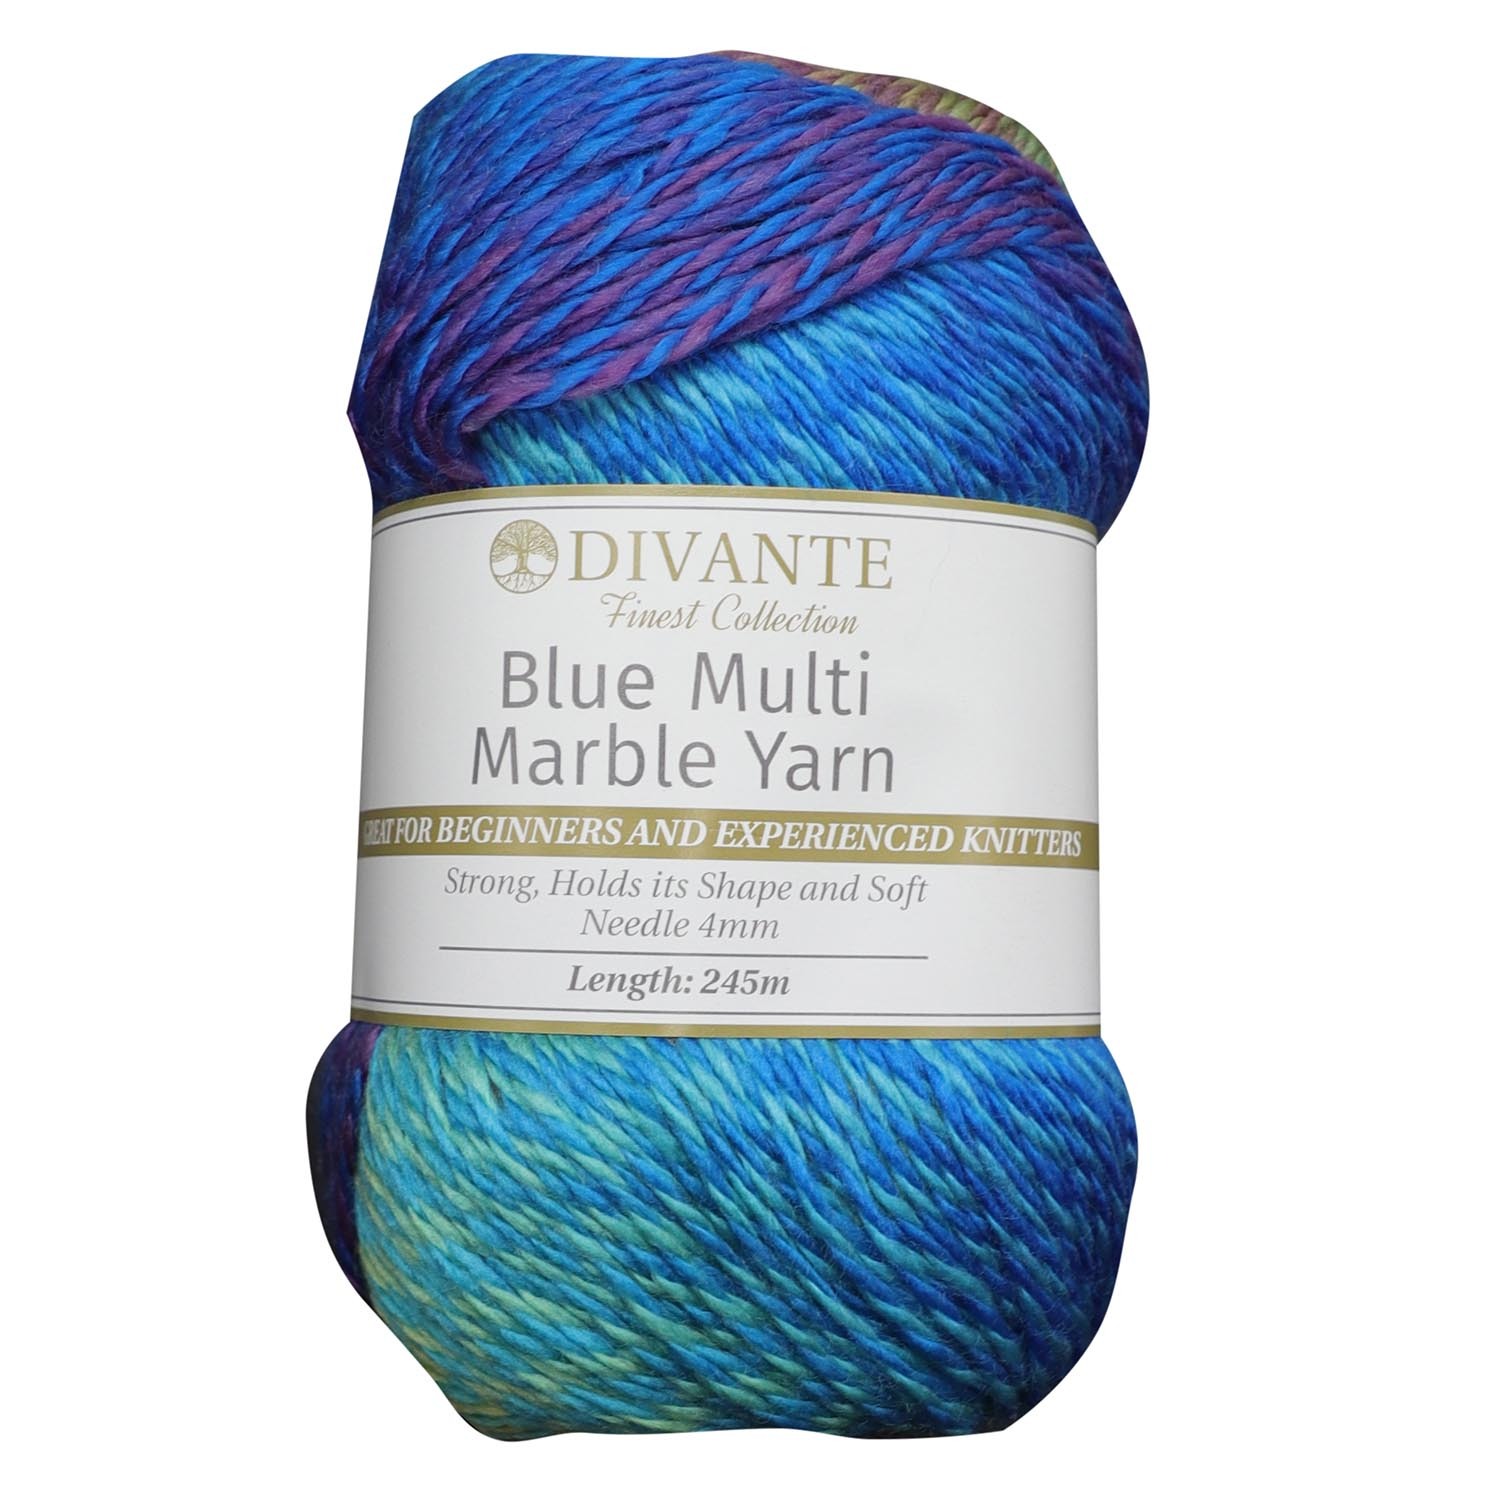 Divante Blue Multi Marble Yarn 100g Image